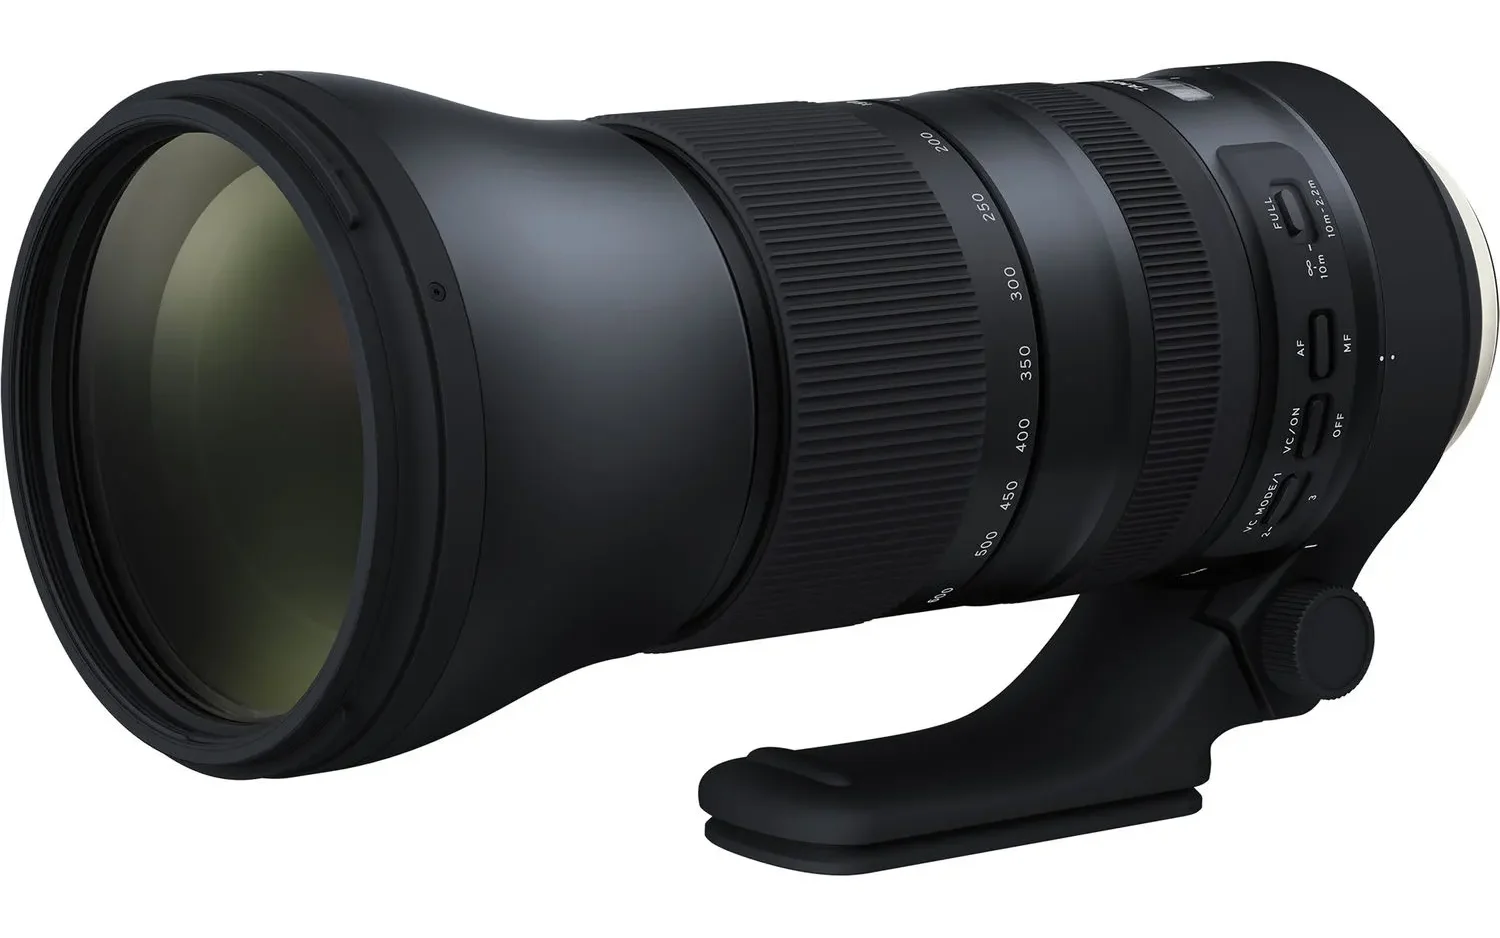 image of Tamron SP 150-600mm f/5-6.3 Di VC USD G2 for Nikon F